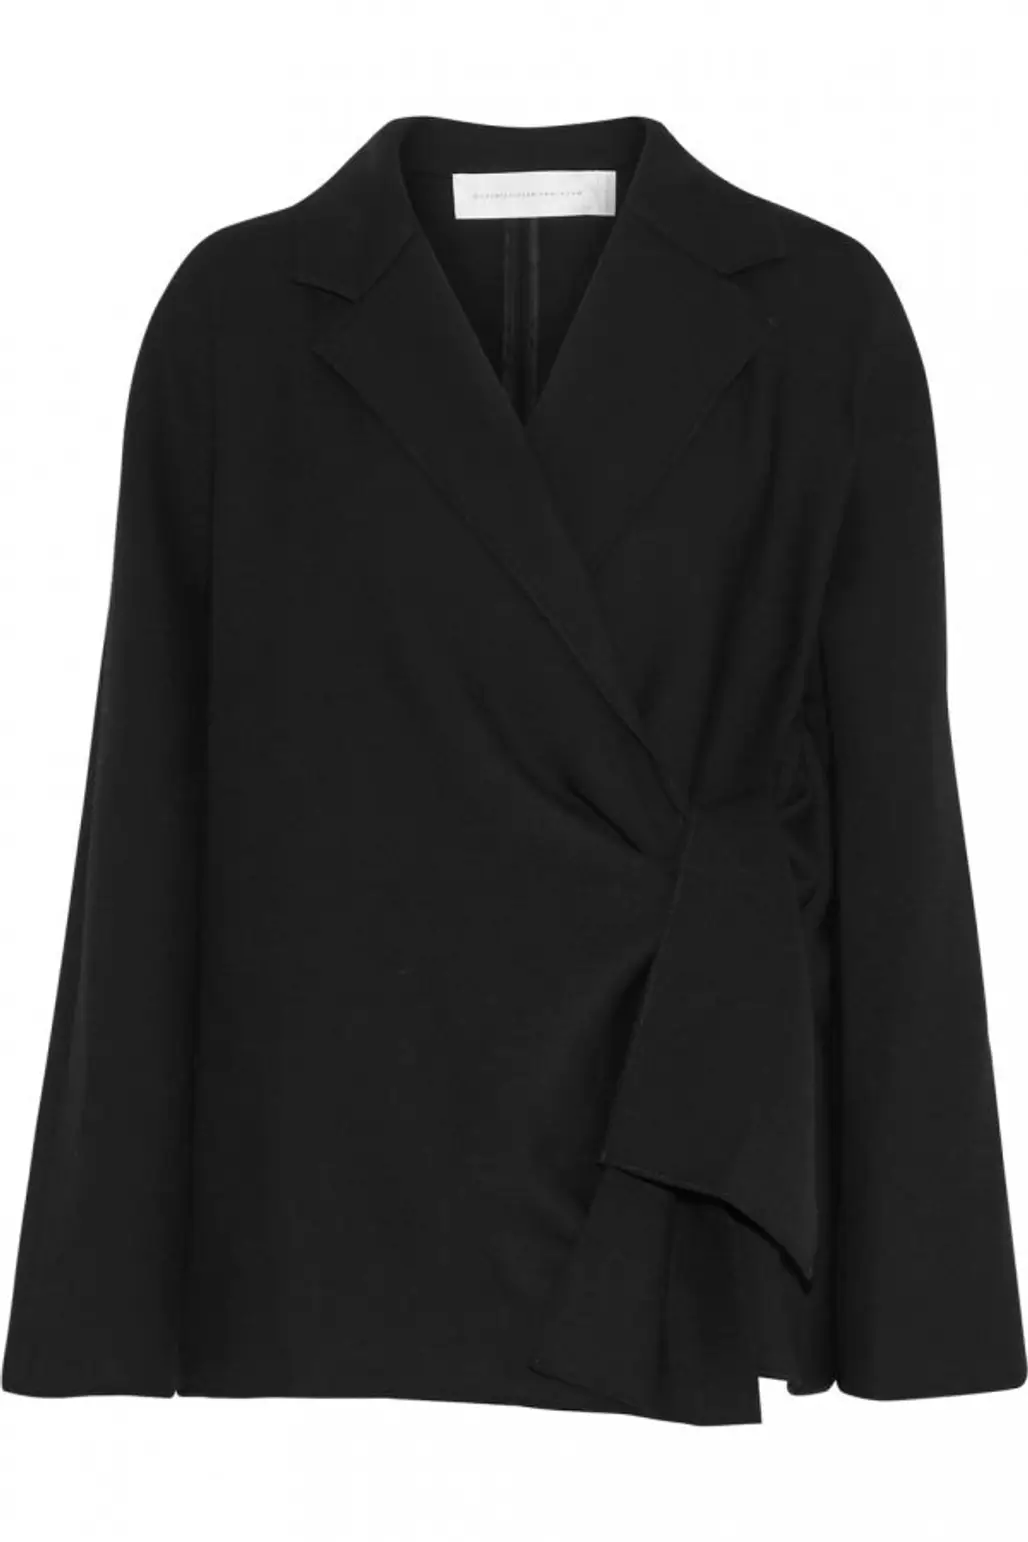 sleeve, outerwear, blazer, jacket, product,